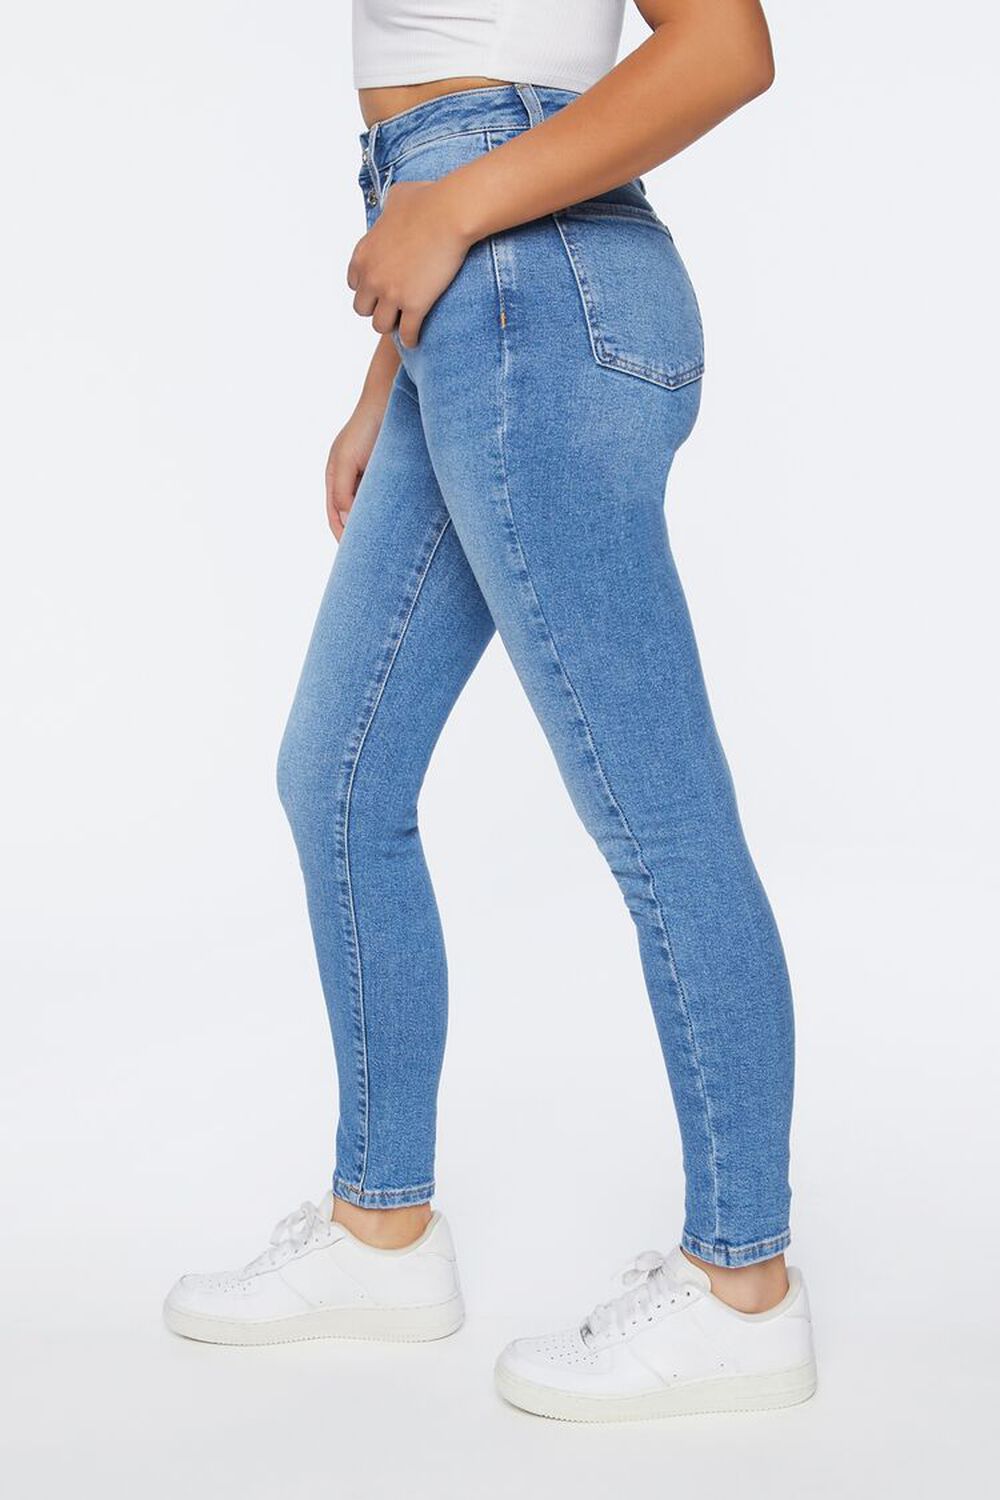 MEDIUM DENIM Recycled Cotton High-Rise Skinny Jeans, image 3